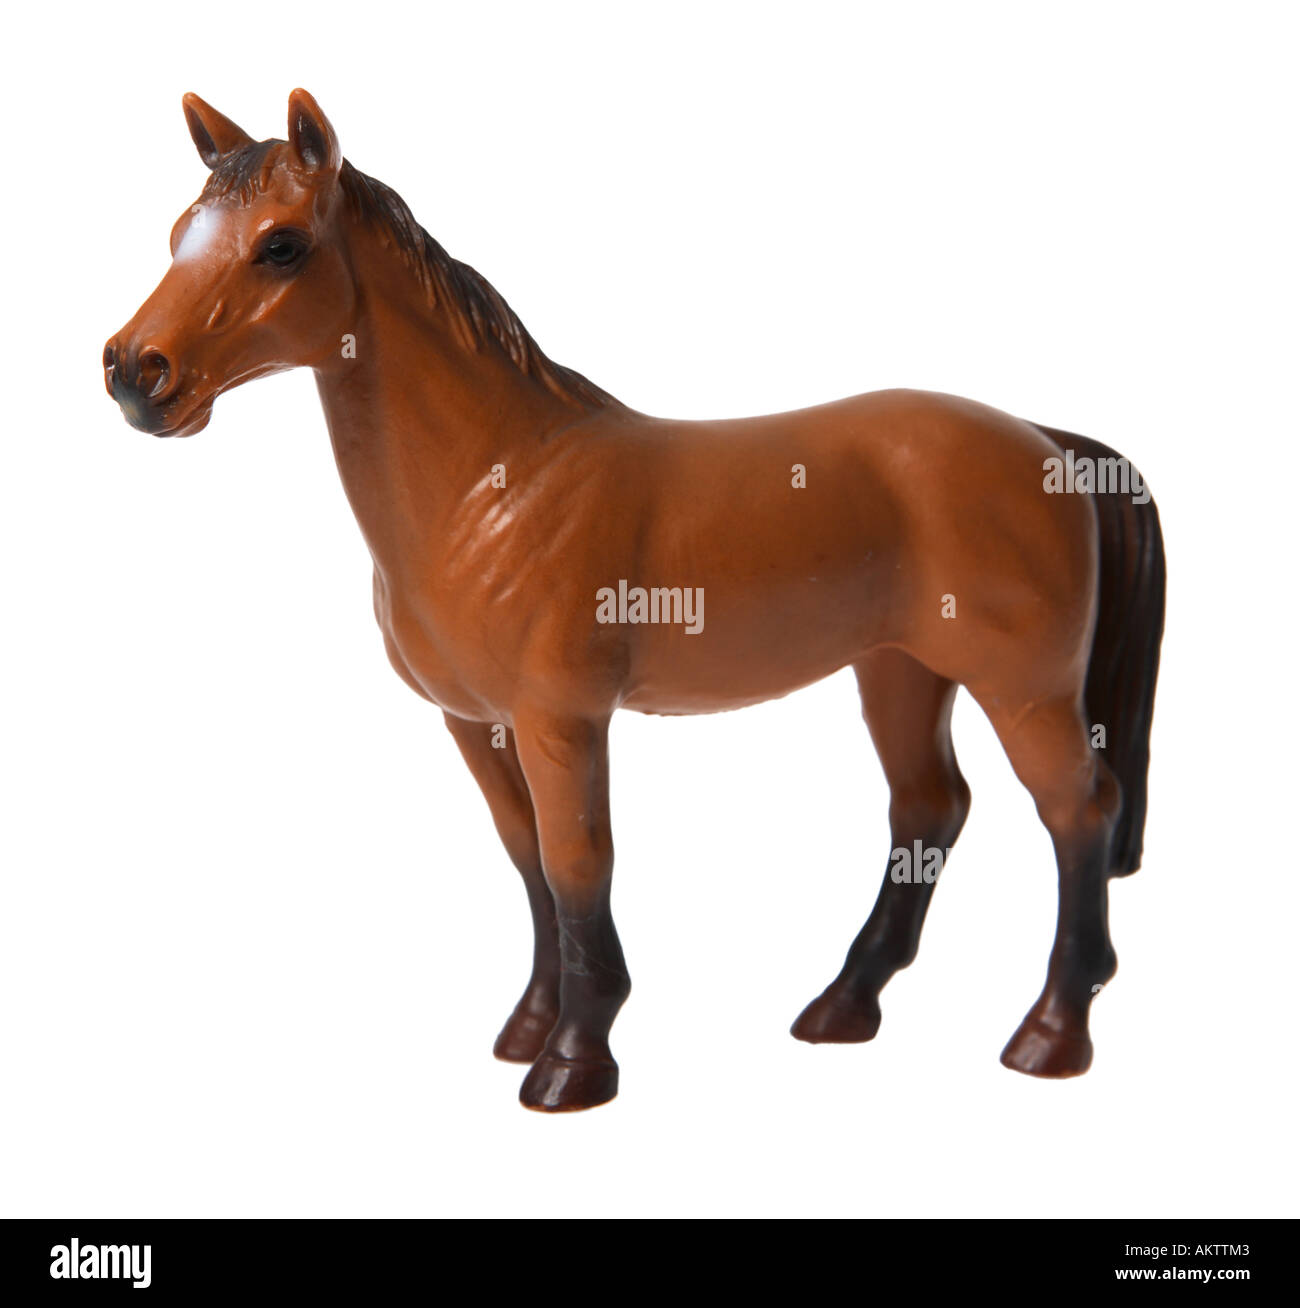 Toy horse fotografías e imágenes de alta resolución - Alamy